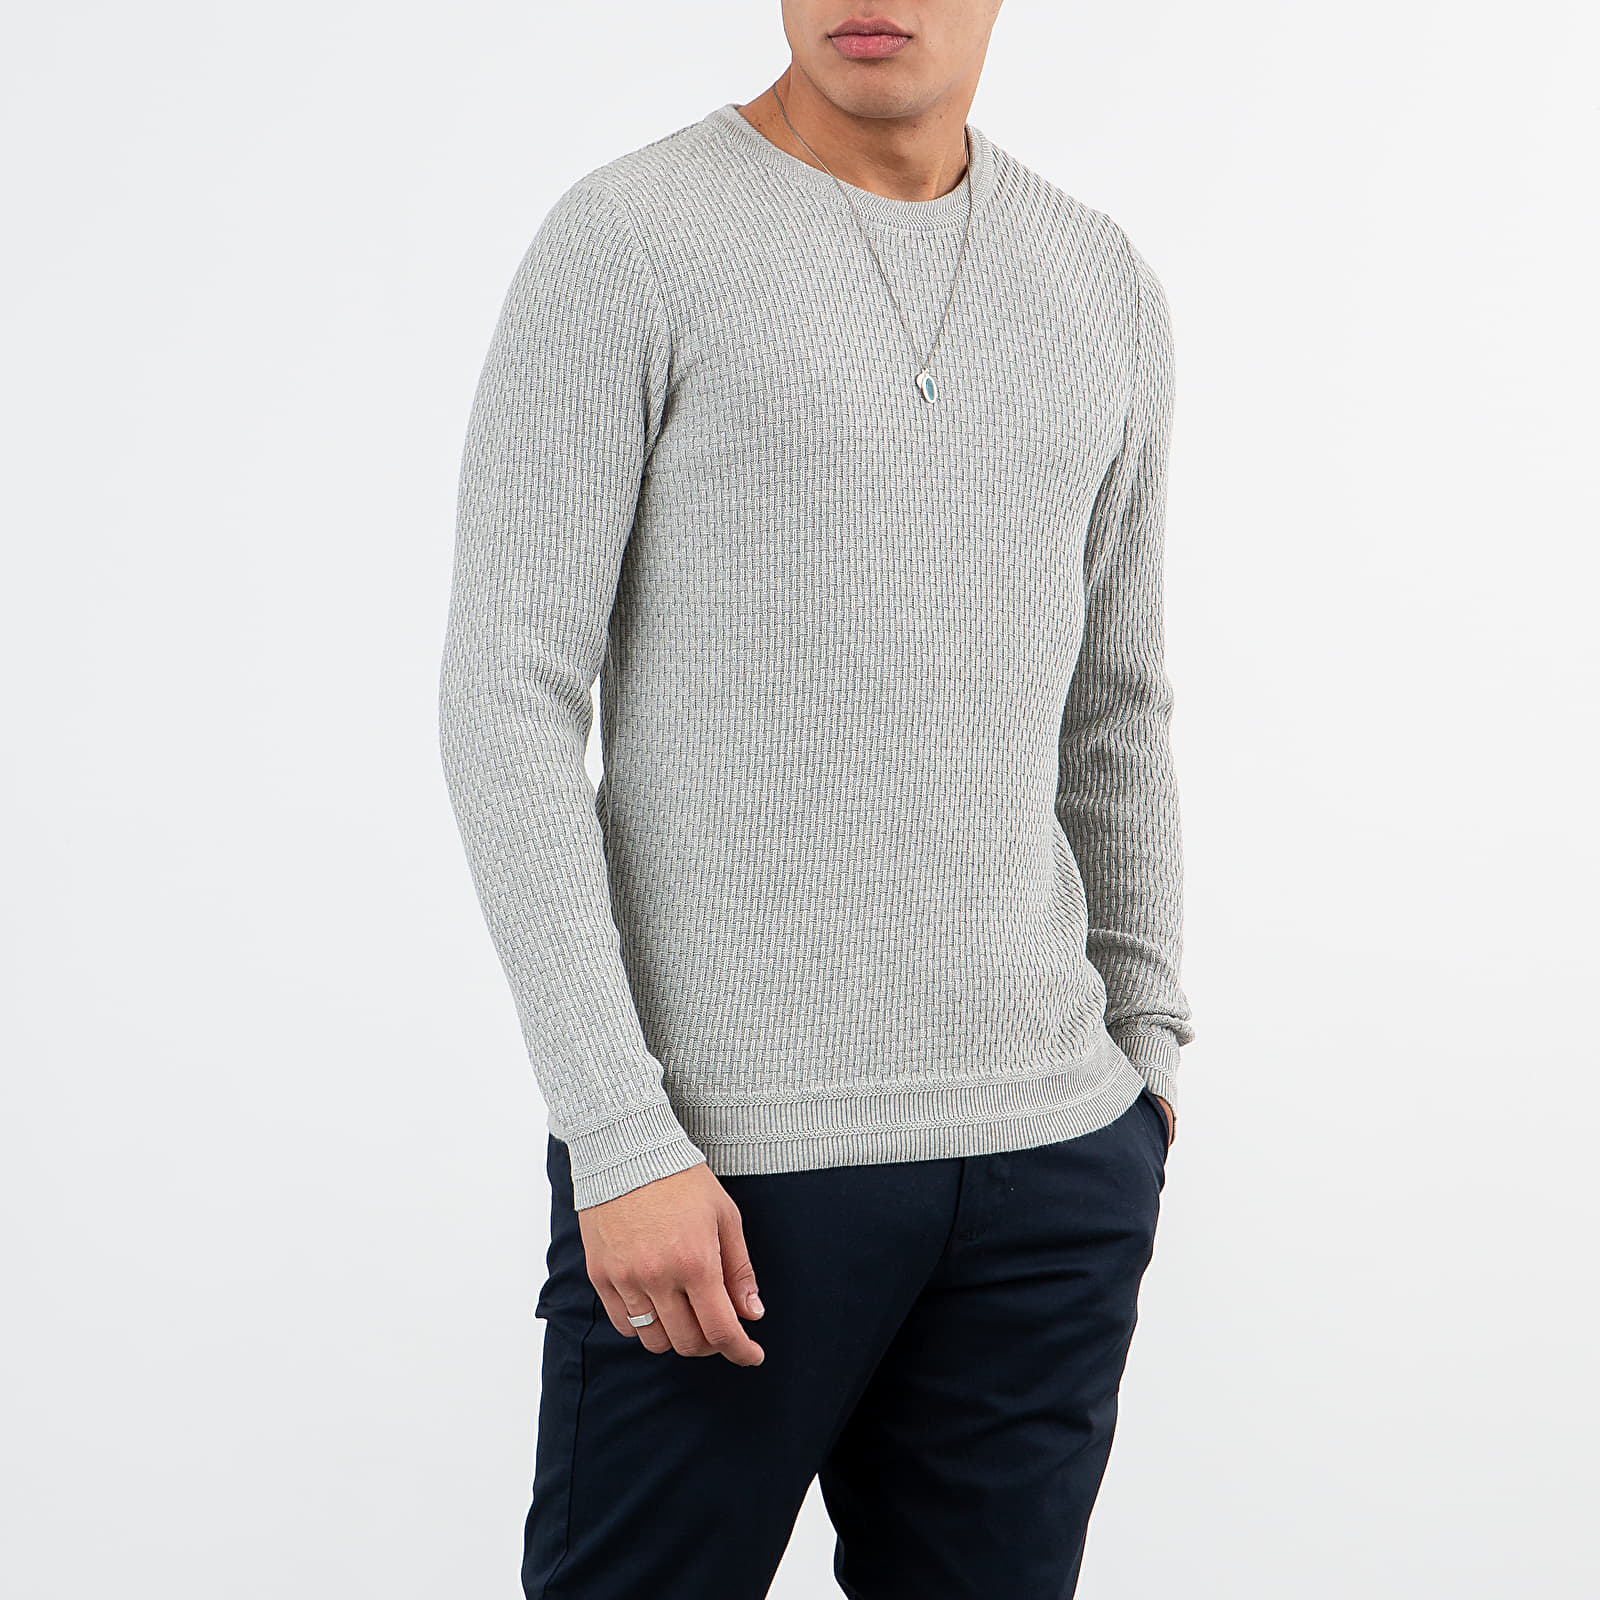 Swetry SELECTED Textured Jumper Sweatshirt Light Grey Melange